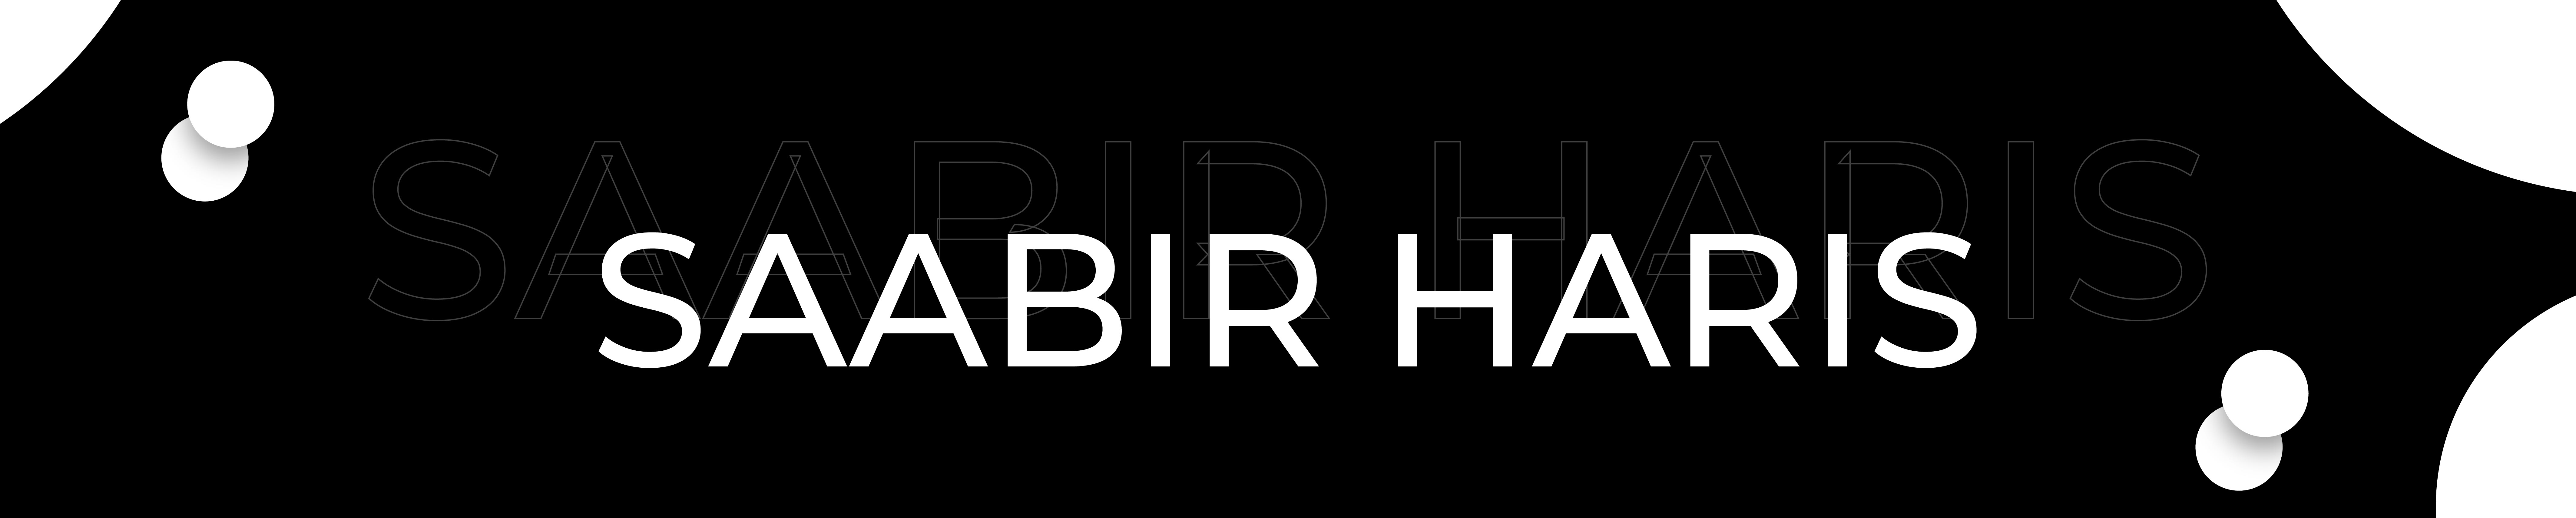 Saabir Haris's profile banner